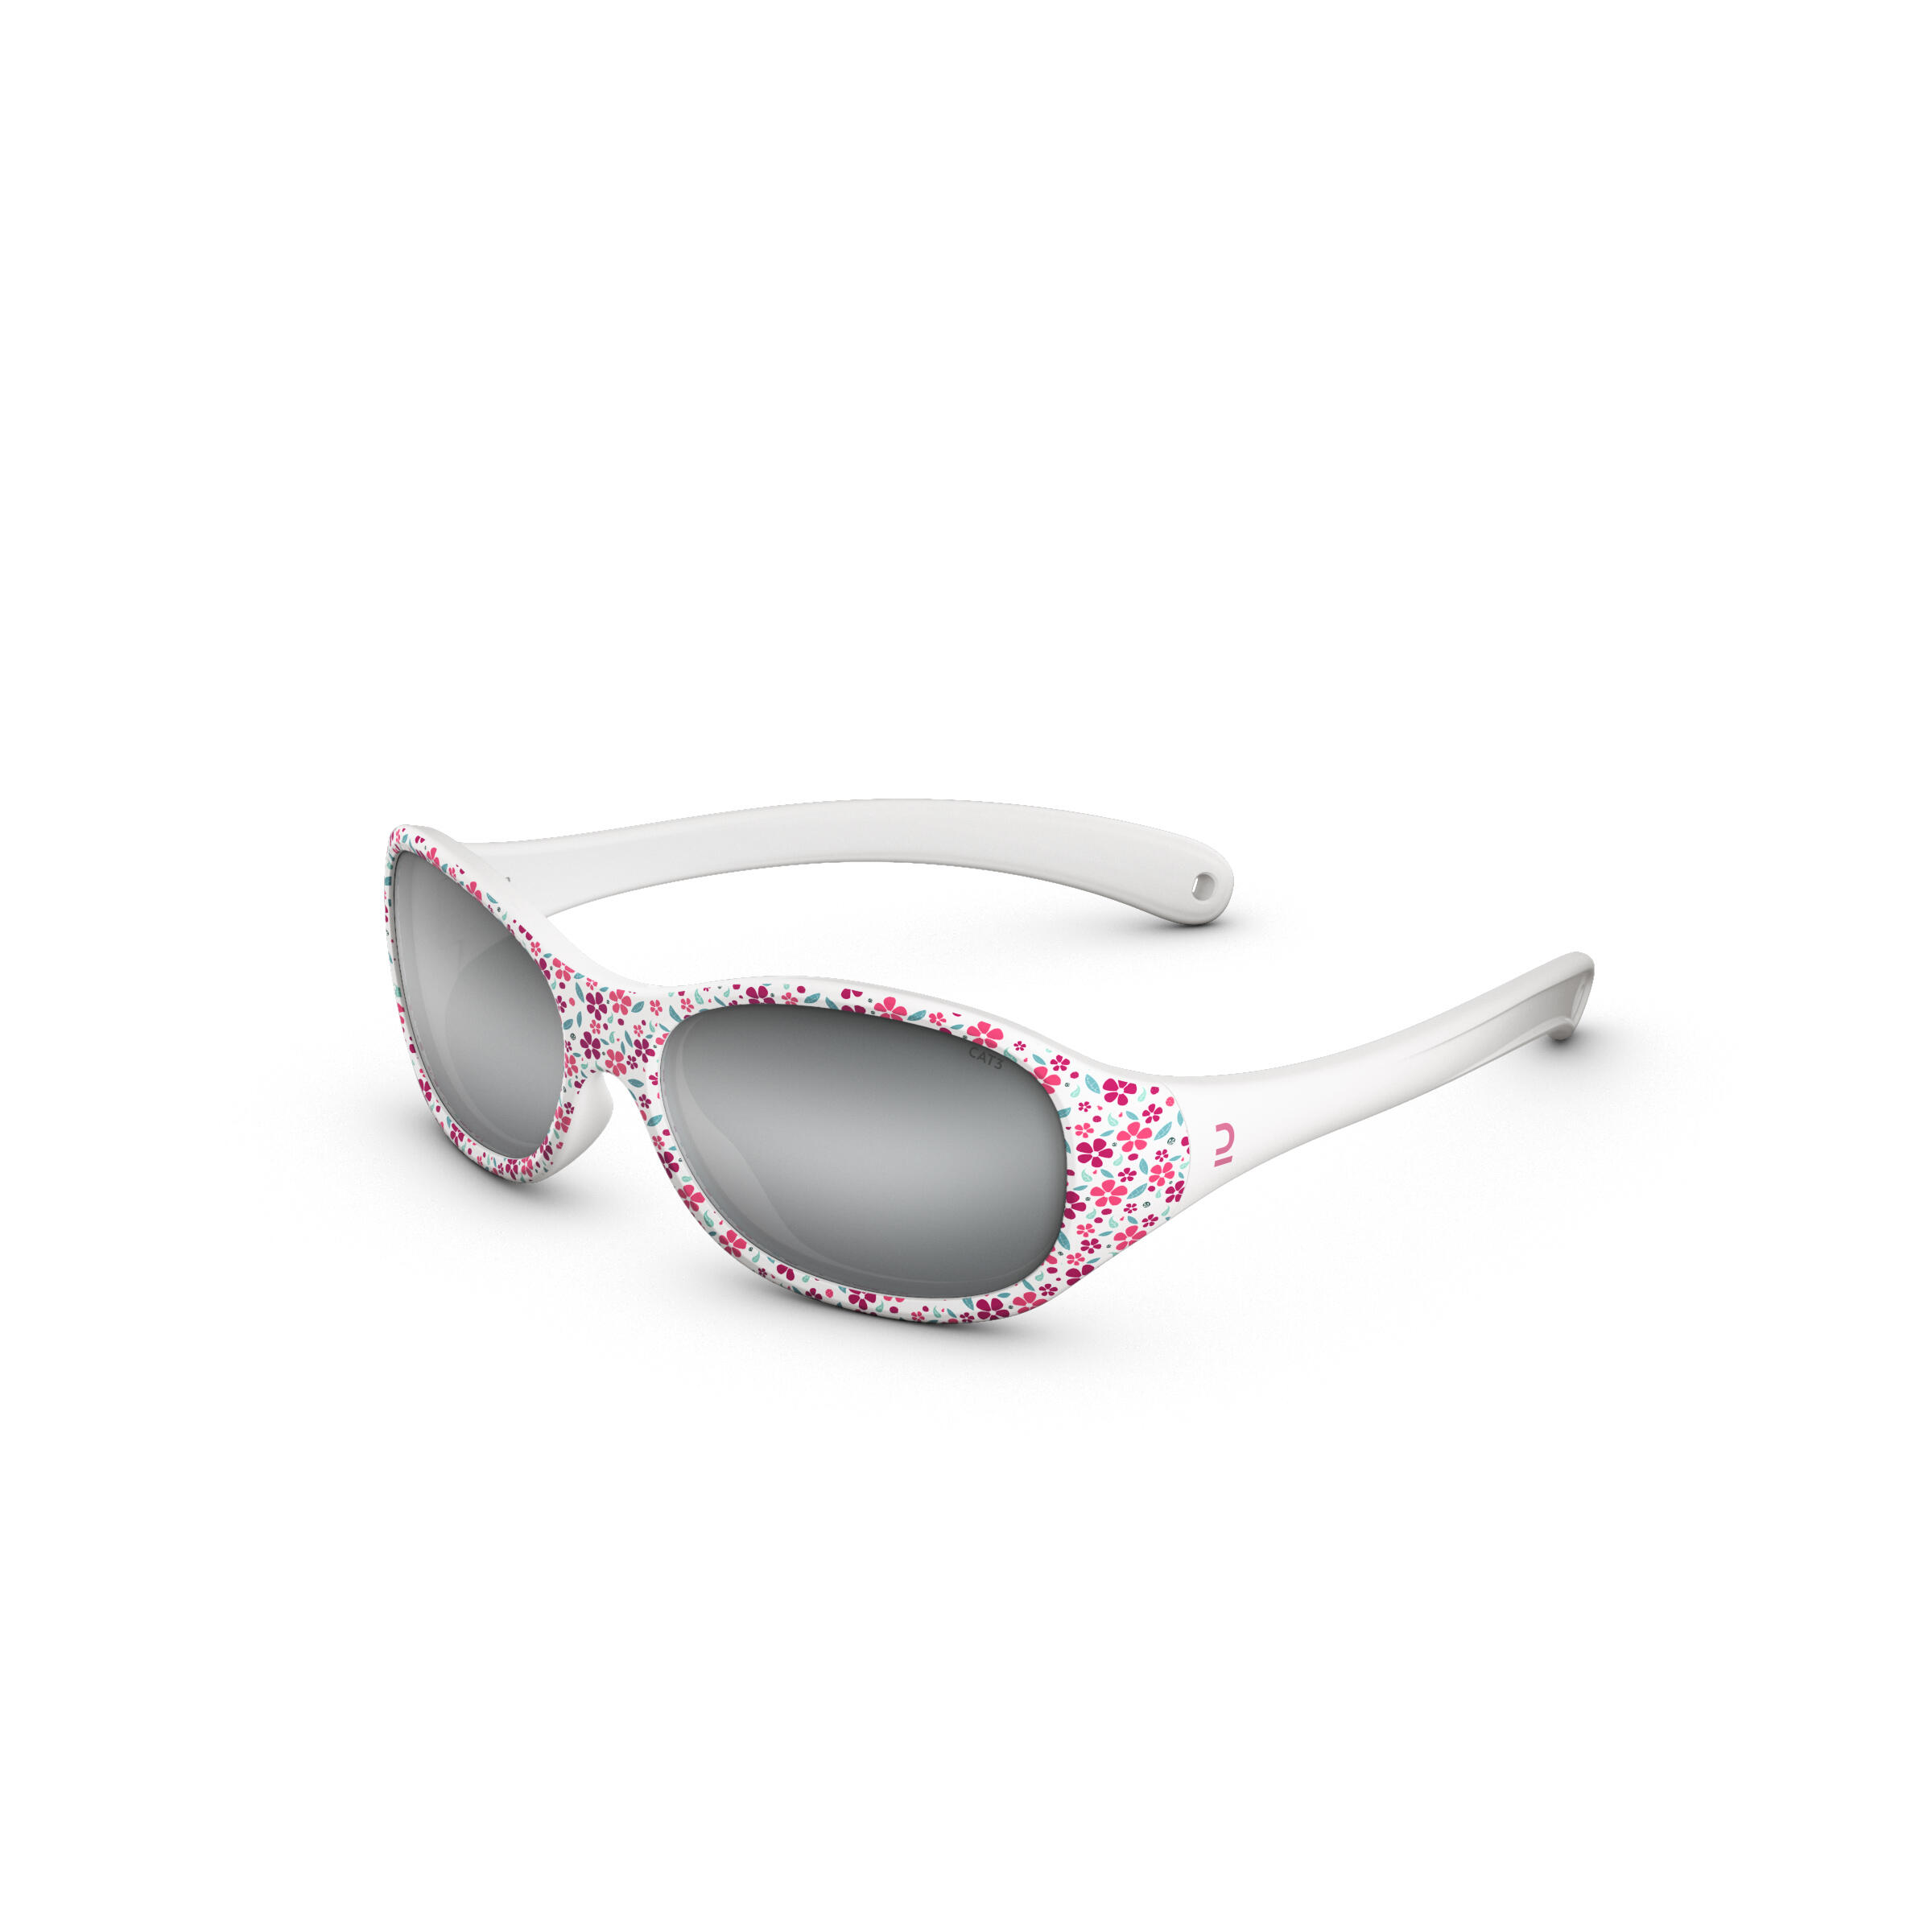 Buy SYGA Children's Sunglasses Square Frame Bow-Knot Lens Eyewear Polygonal  Kids Goggles Anti-UV Sunglasses (Black) at Amazon.in